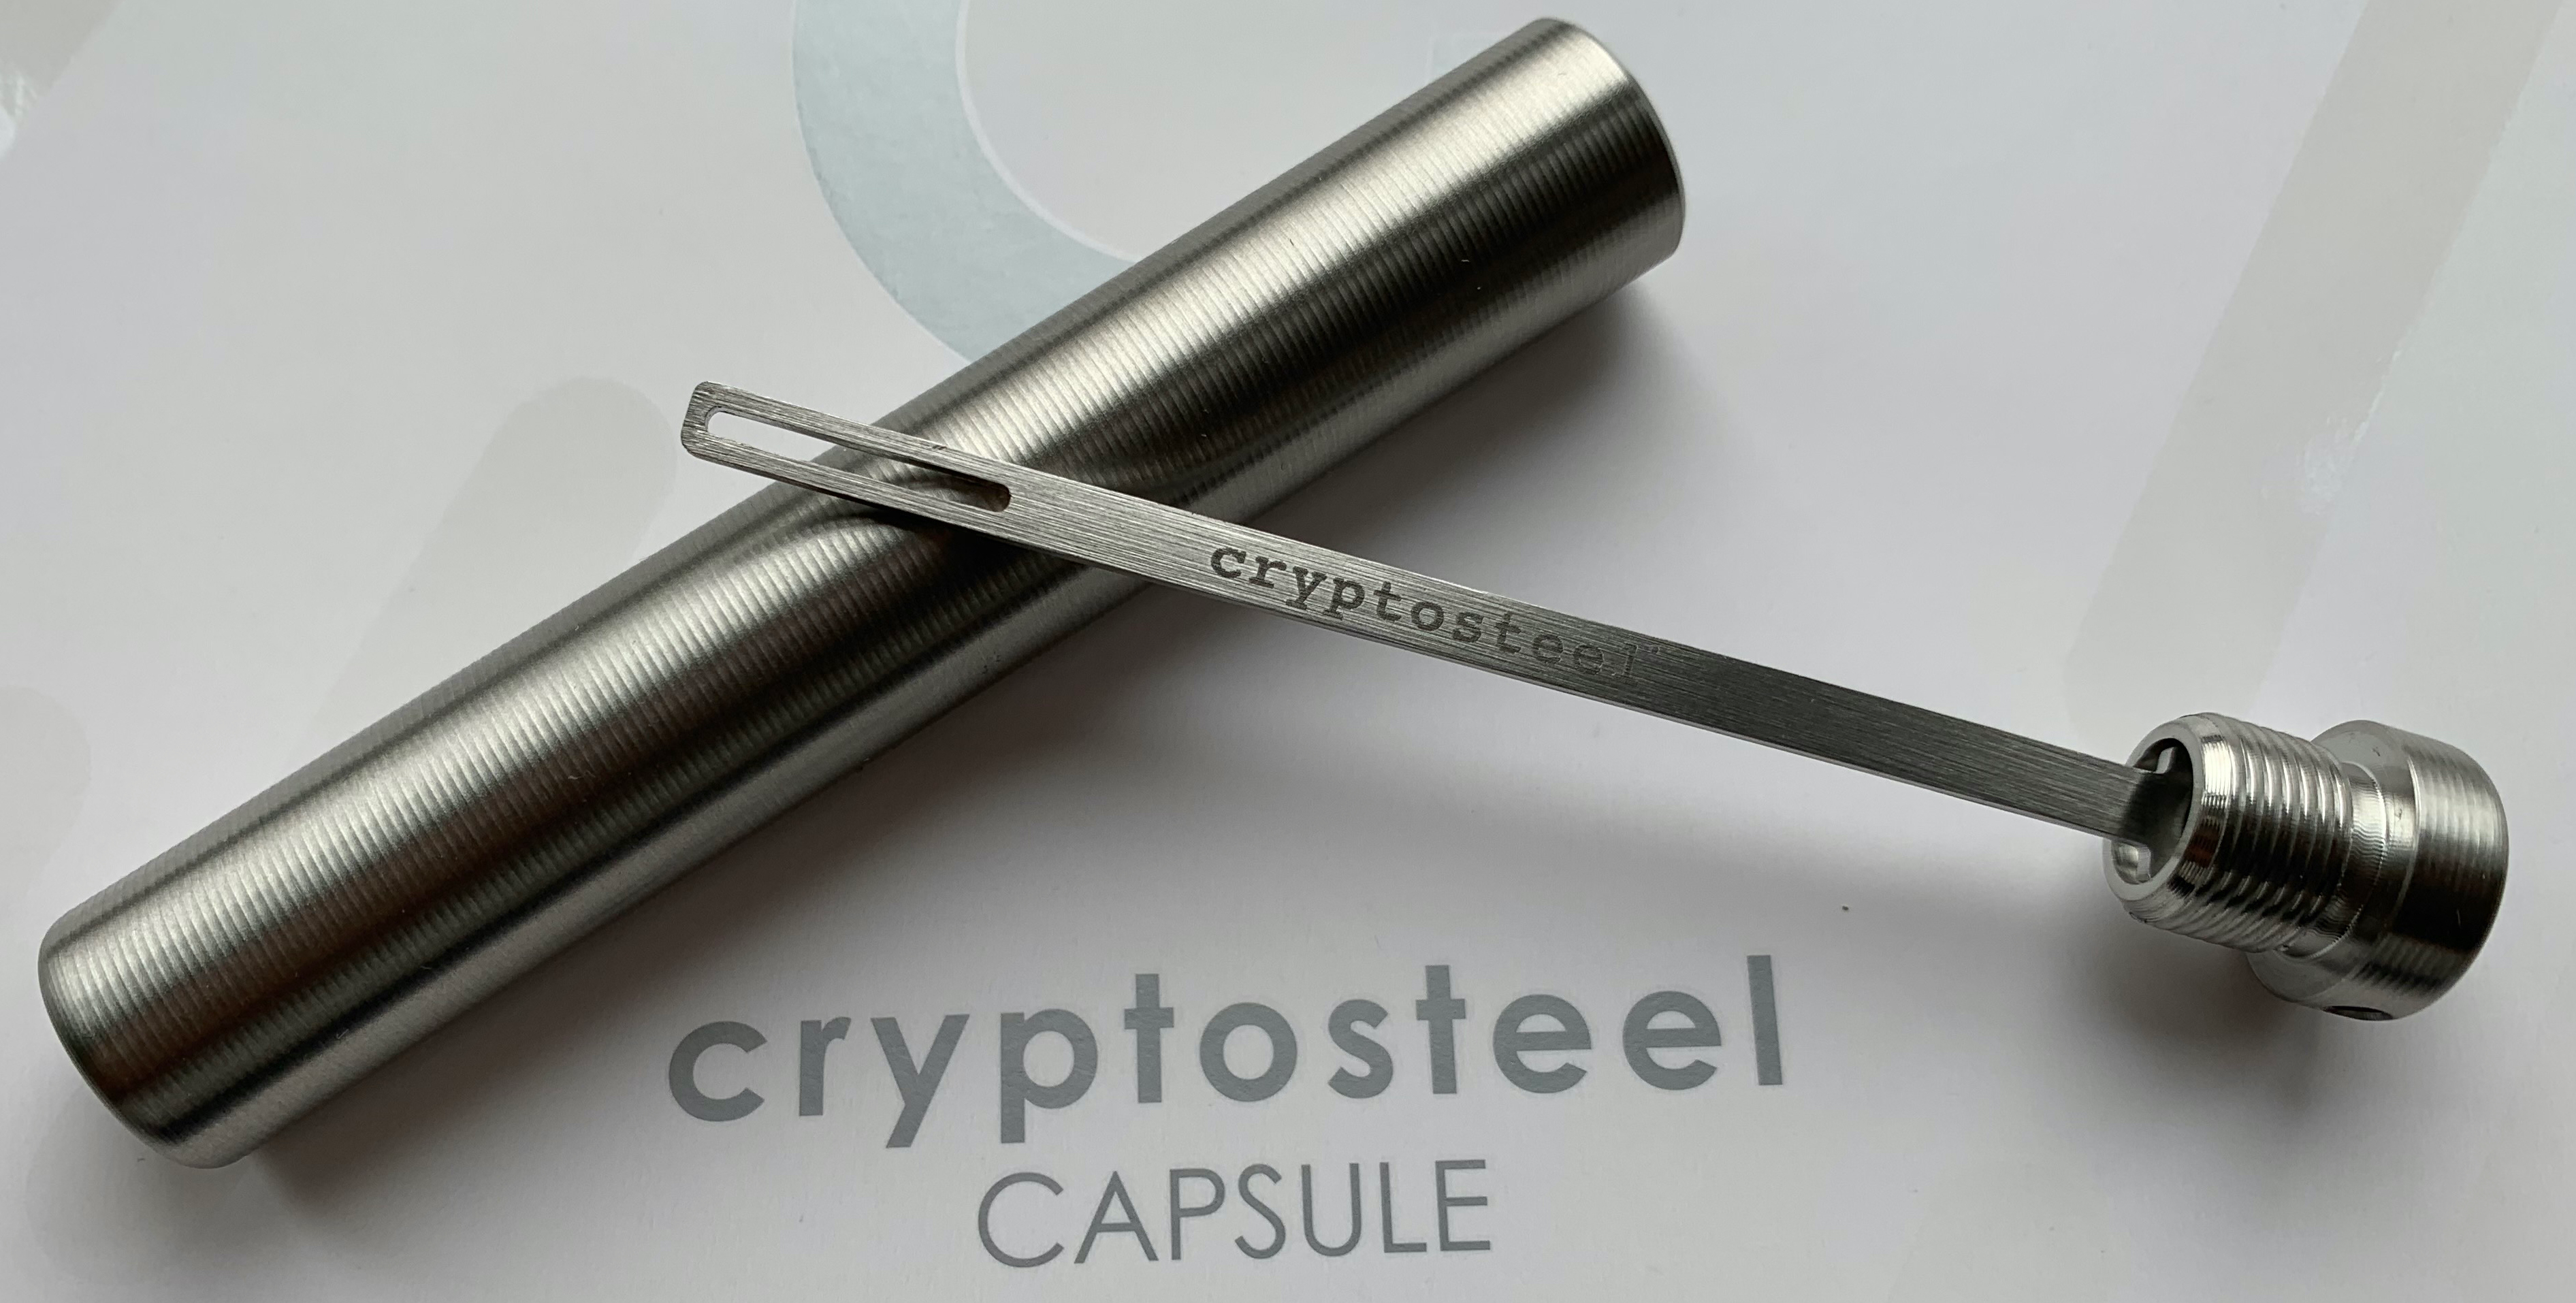 Cryptosteel Capsule